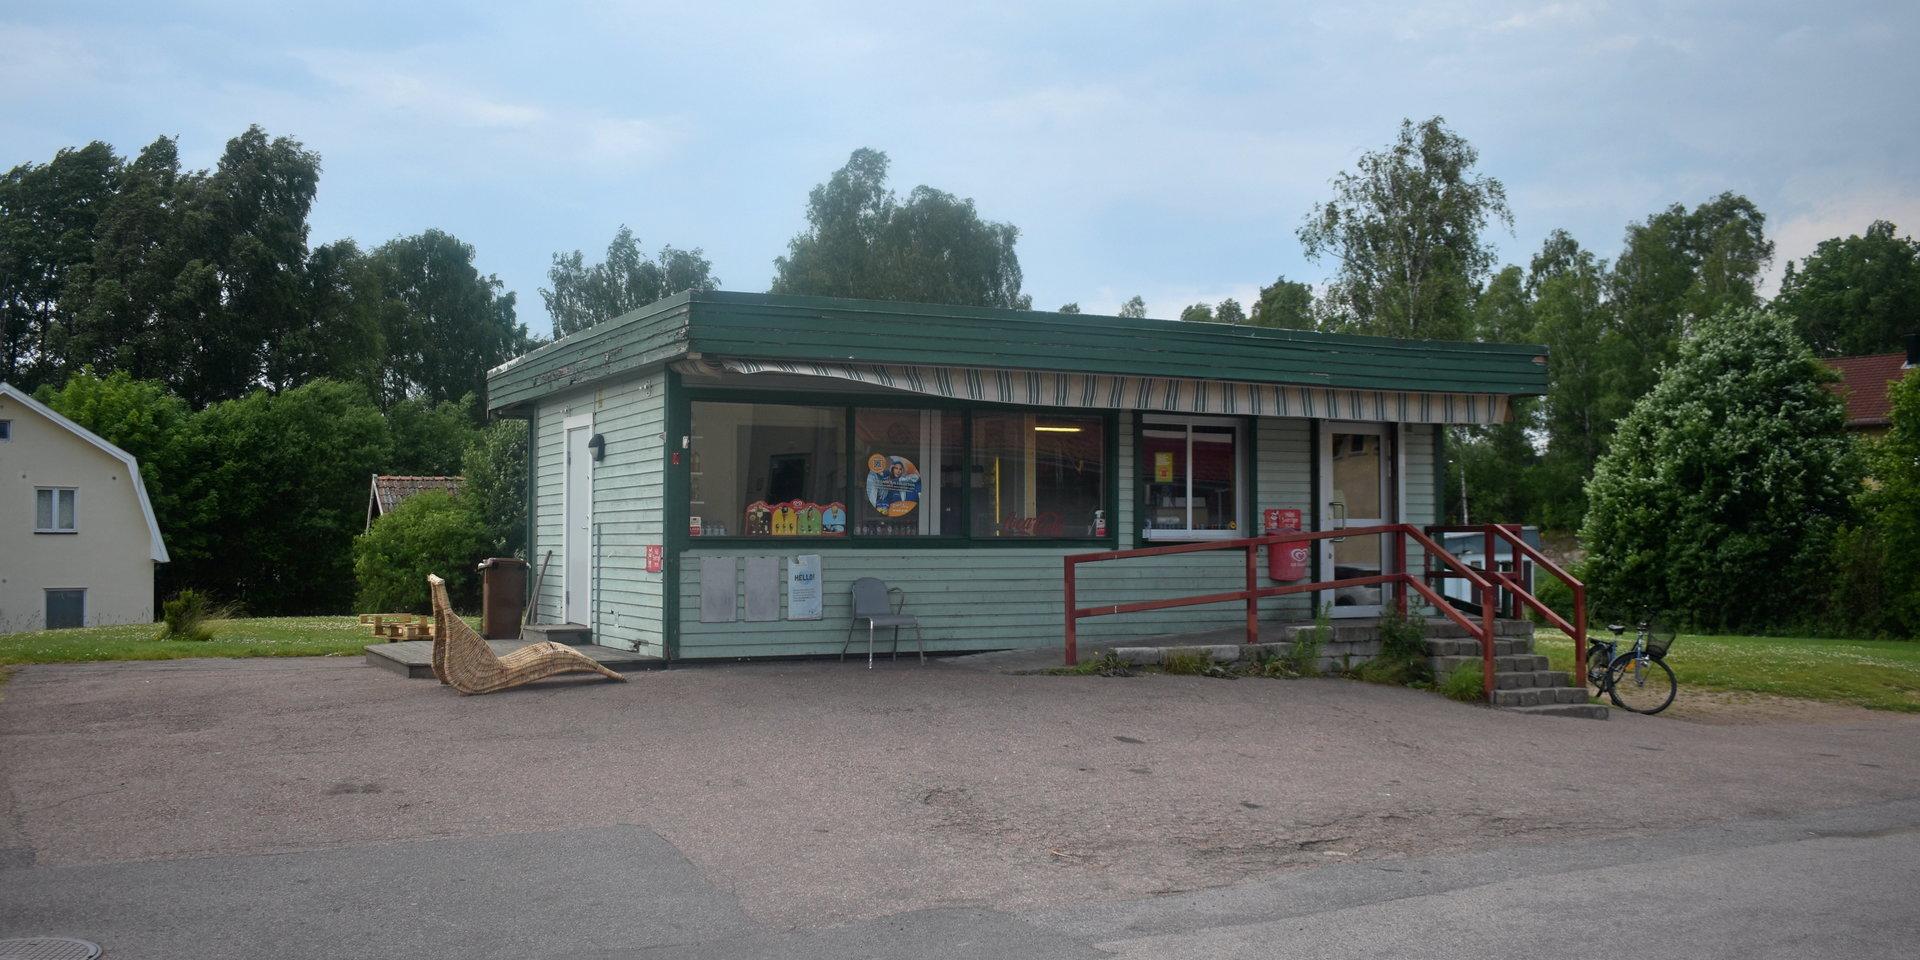 Hylte Kiosken, även kallad Gröna Kiosken i folkmun, i Hyltebruk.